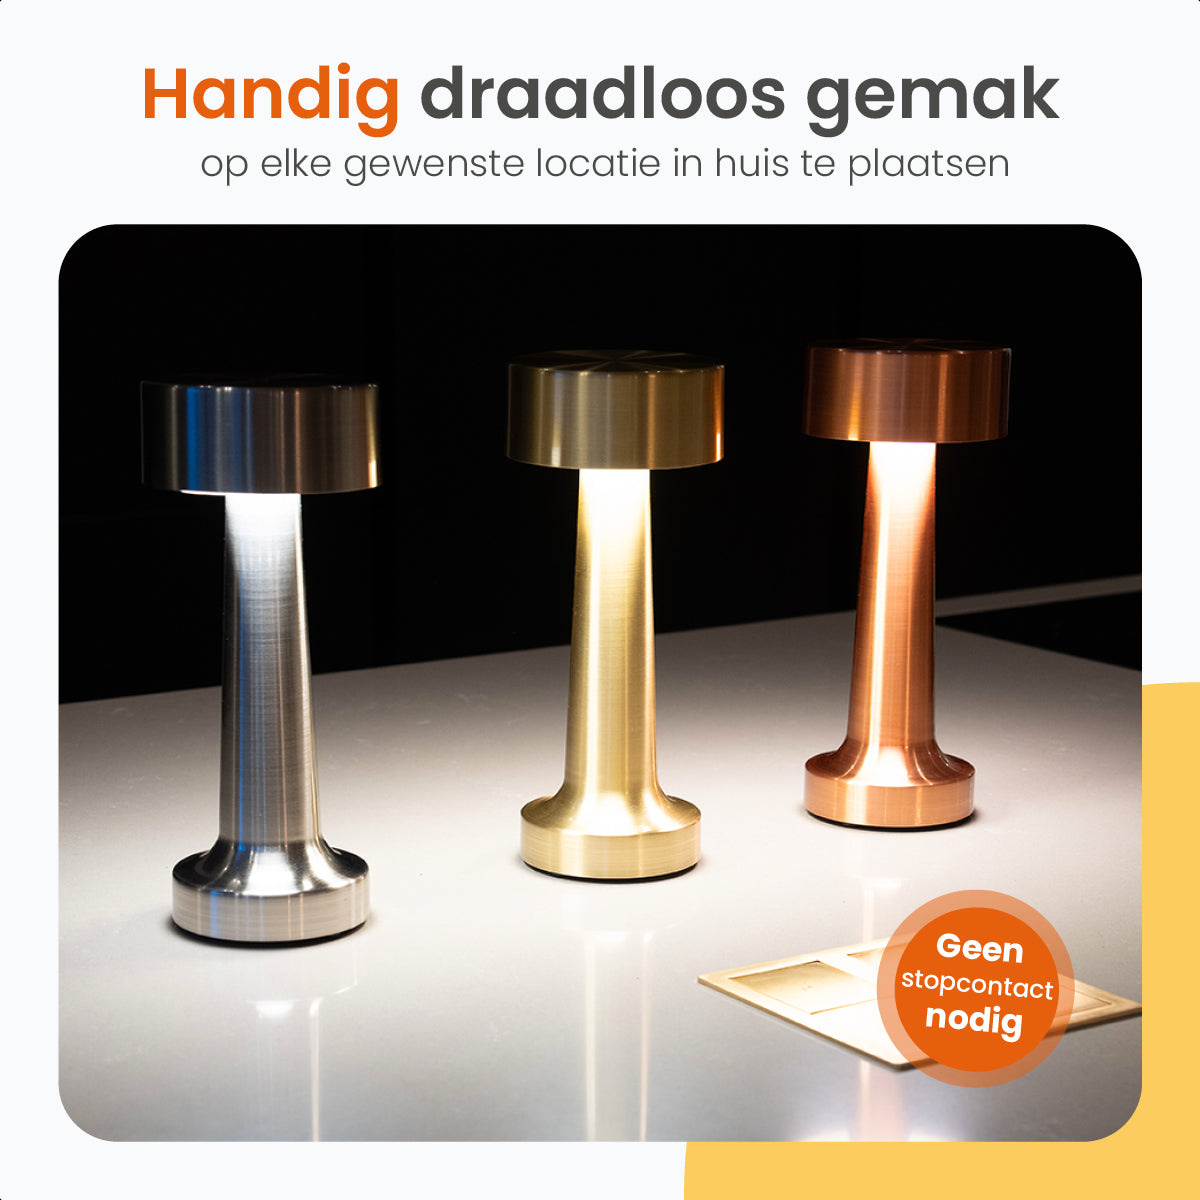 Goliving Classic Tafellamp Oplaadbaar – Draadloos en dimbaar – Moderne touch lamp – Nachtlamp Slaapkamer – 21 cm – Goud